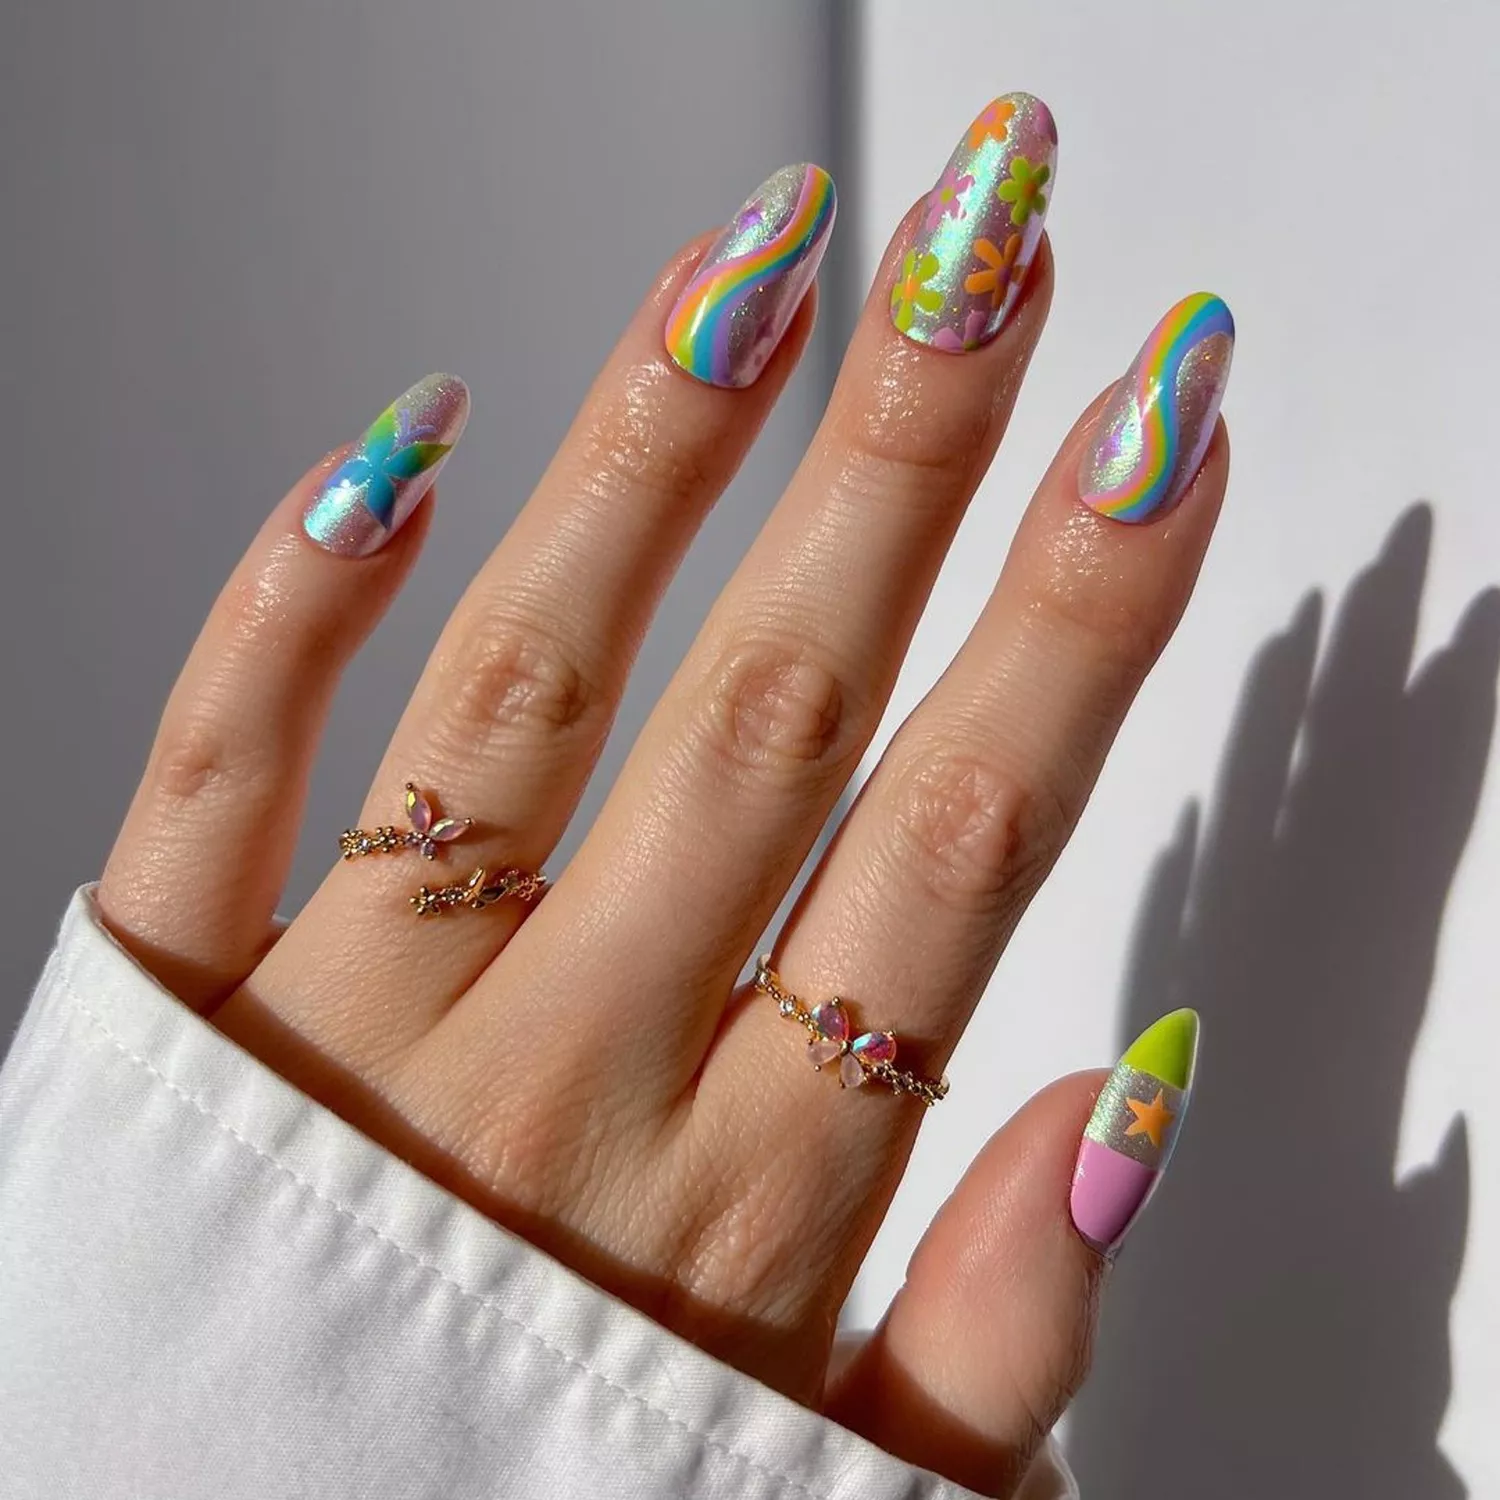 Scooby Doo-inspired summer nail art design